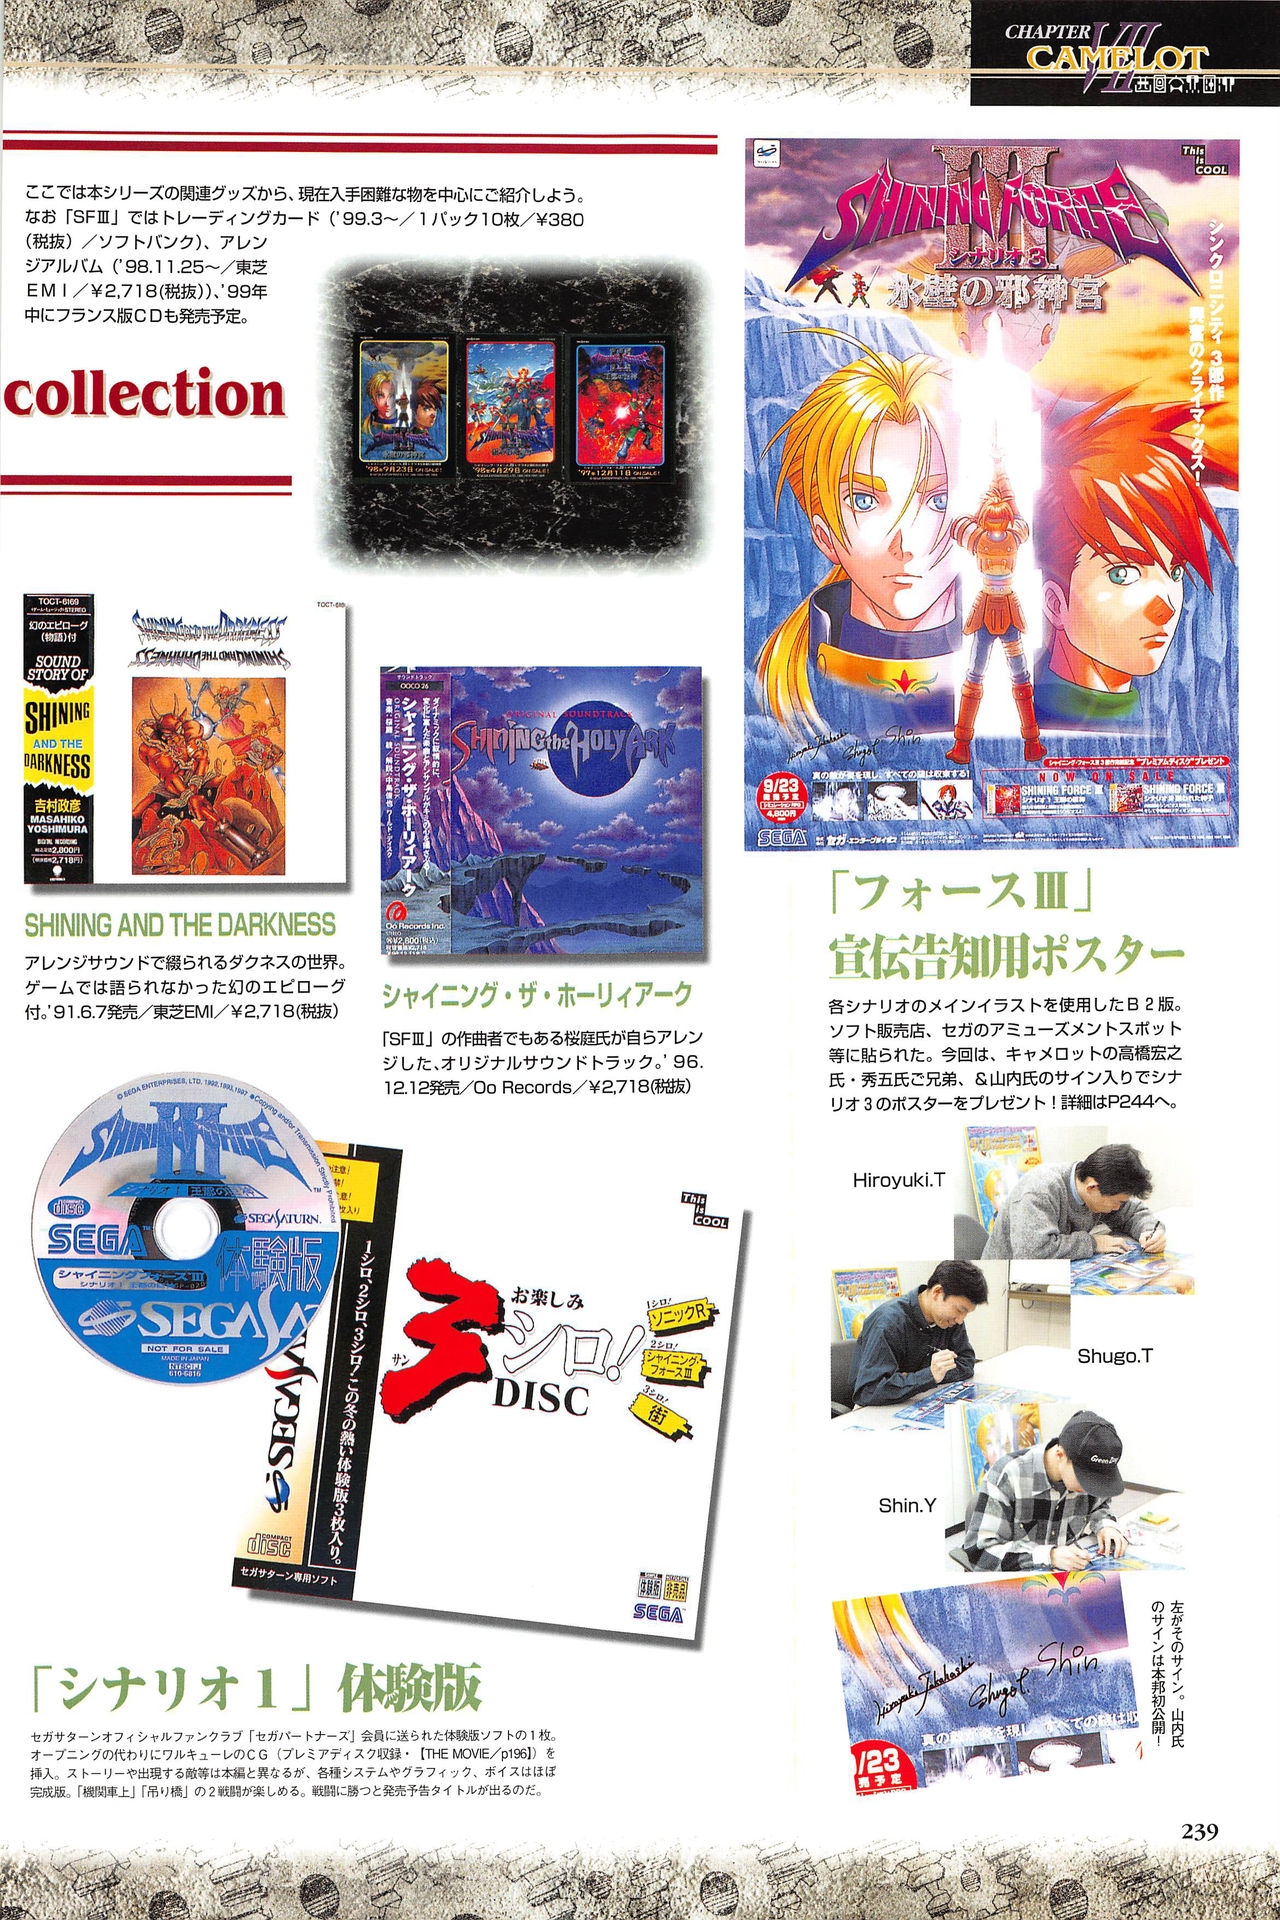 [Kajiyama  Hiroshi] Shining Force III Official Setting Collection Artbook 244